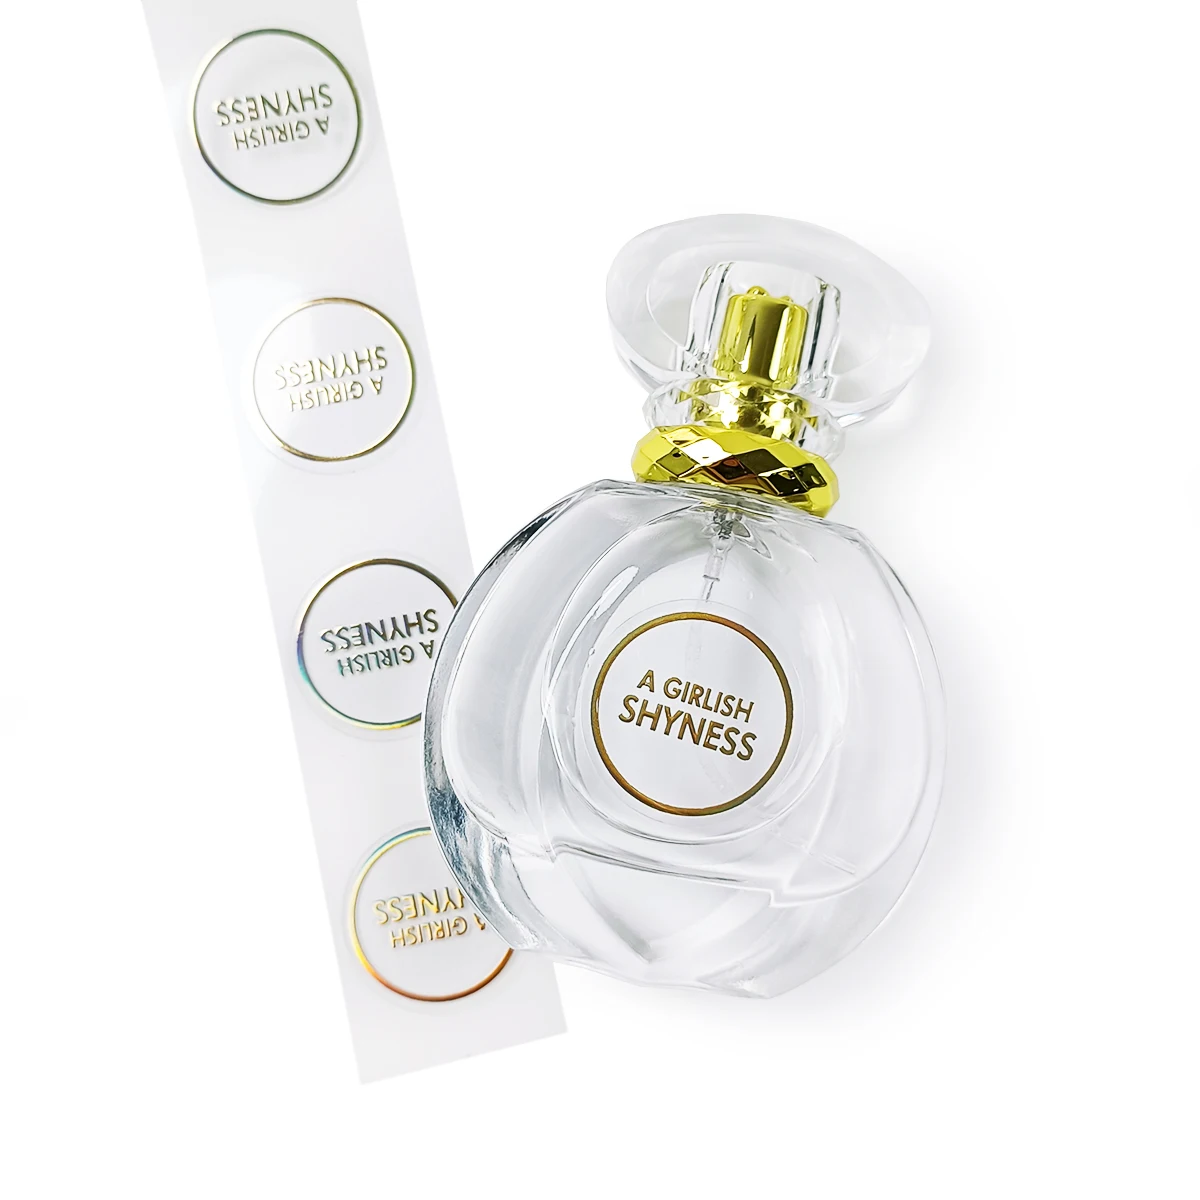 custom printing vinyl logo cosmetic perfume bottle packaging labels,gold/silver/rose foil metallic embossed holographic sticker